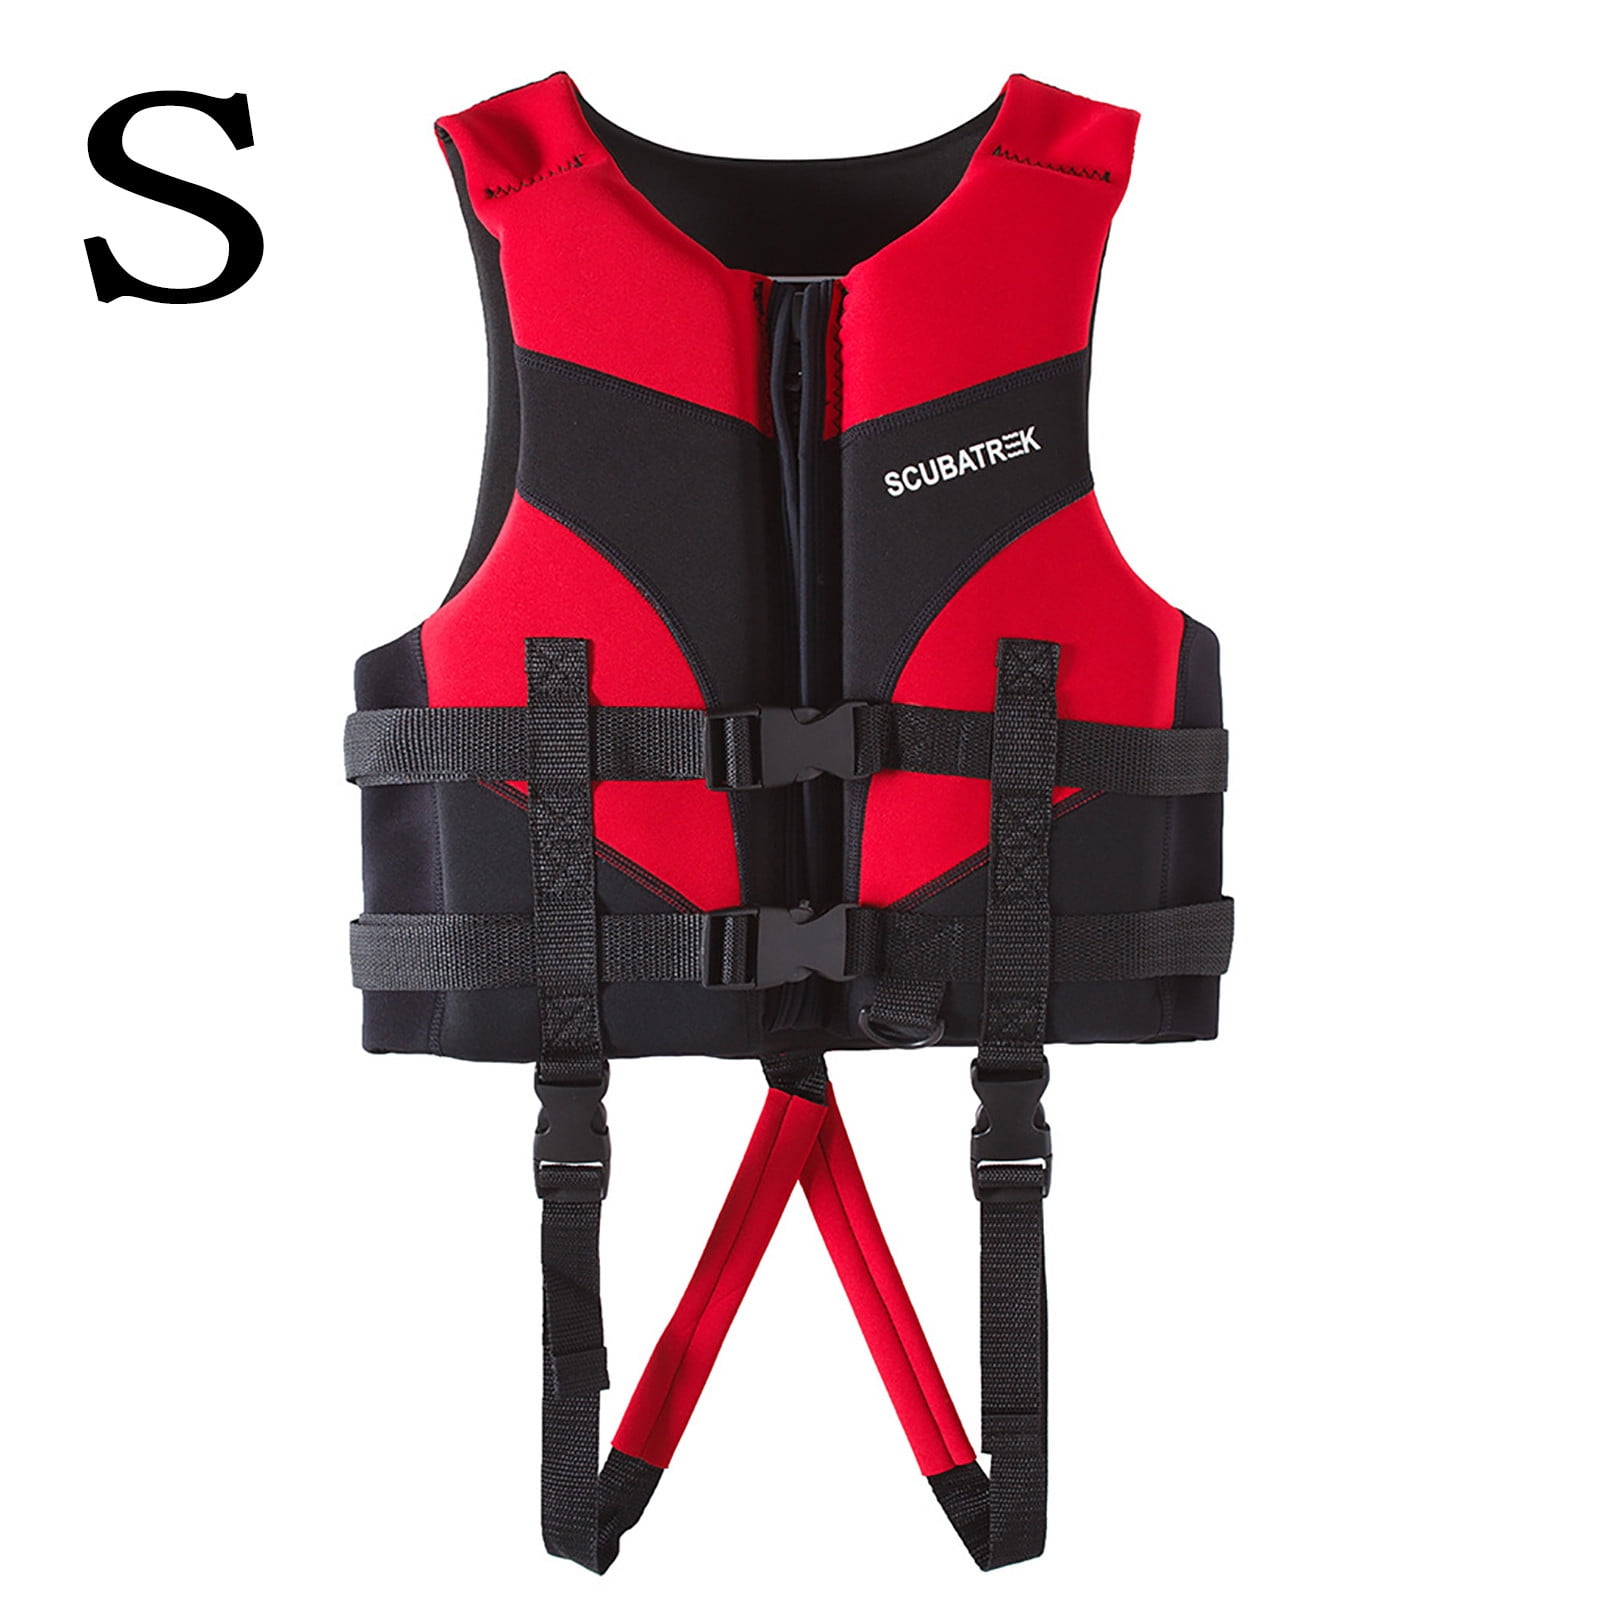 Adult Kids Life Jacket Kayak Ski Buoyancy Aid Vest Sailing Fishing Watersport LF 